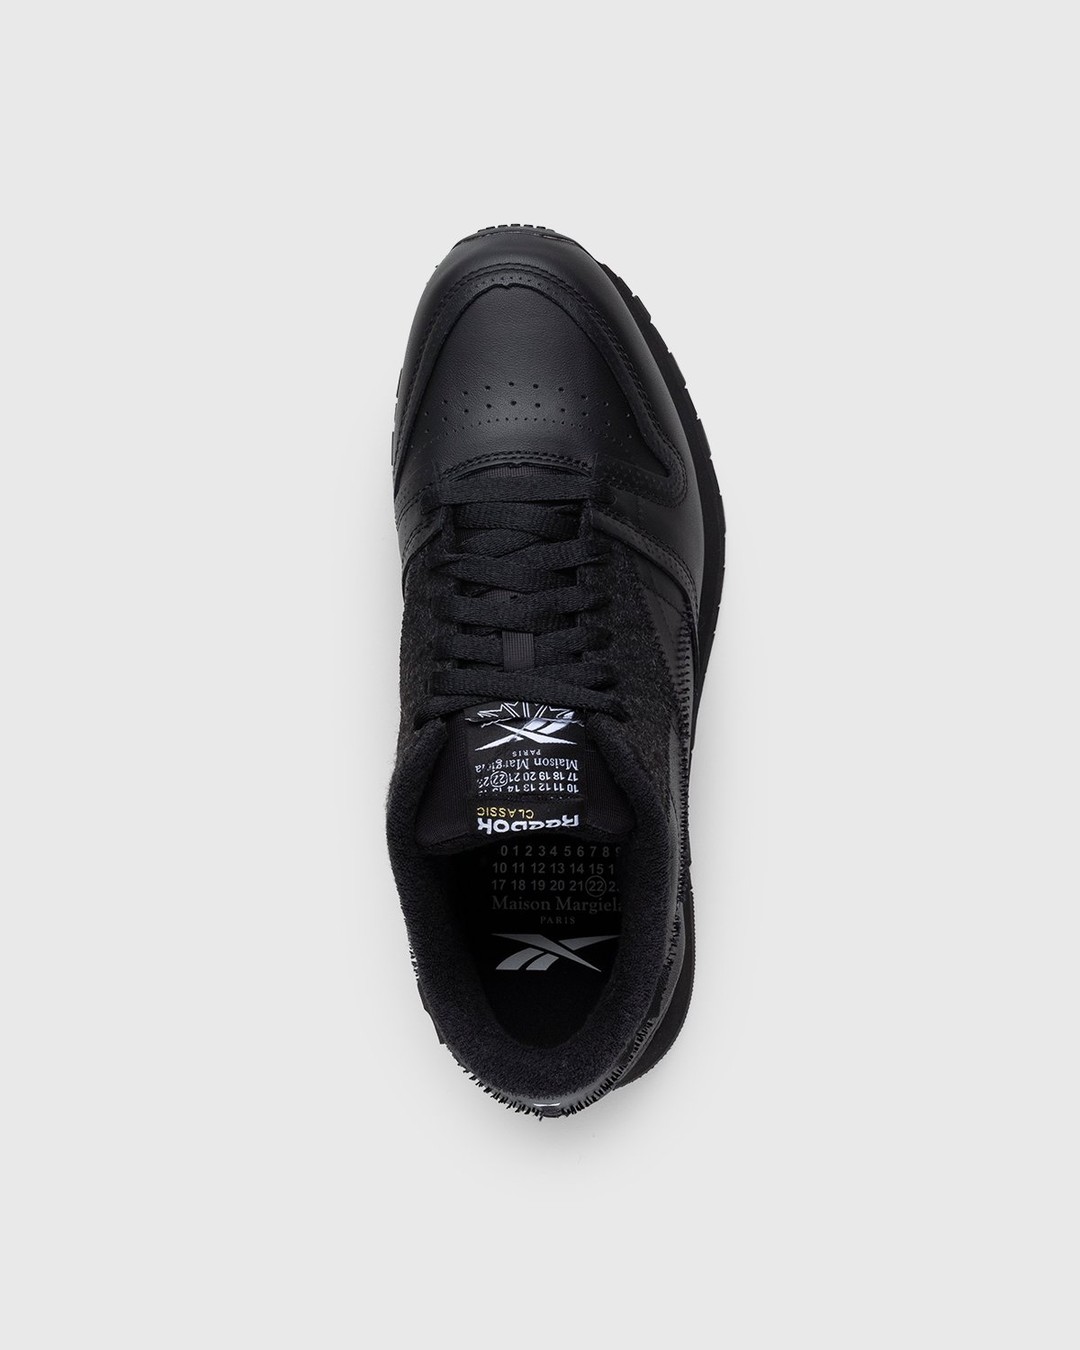 Maison Margiela x Reebok – Classic Leather Memory Of Black/Footwear White/ Black | Highsnobiety